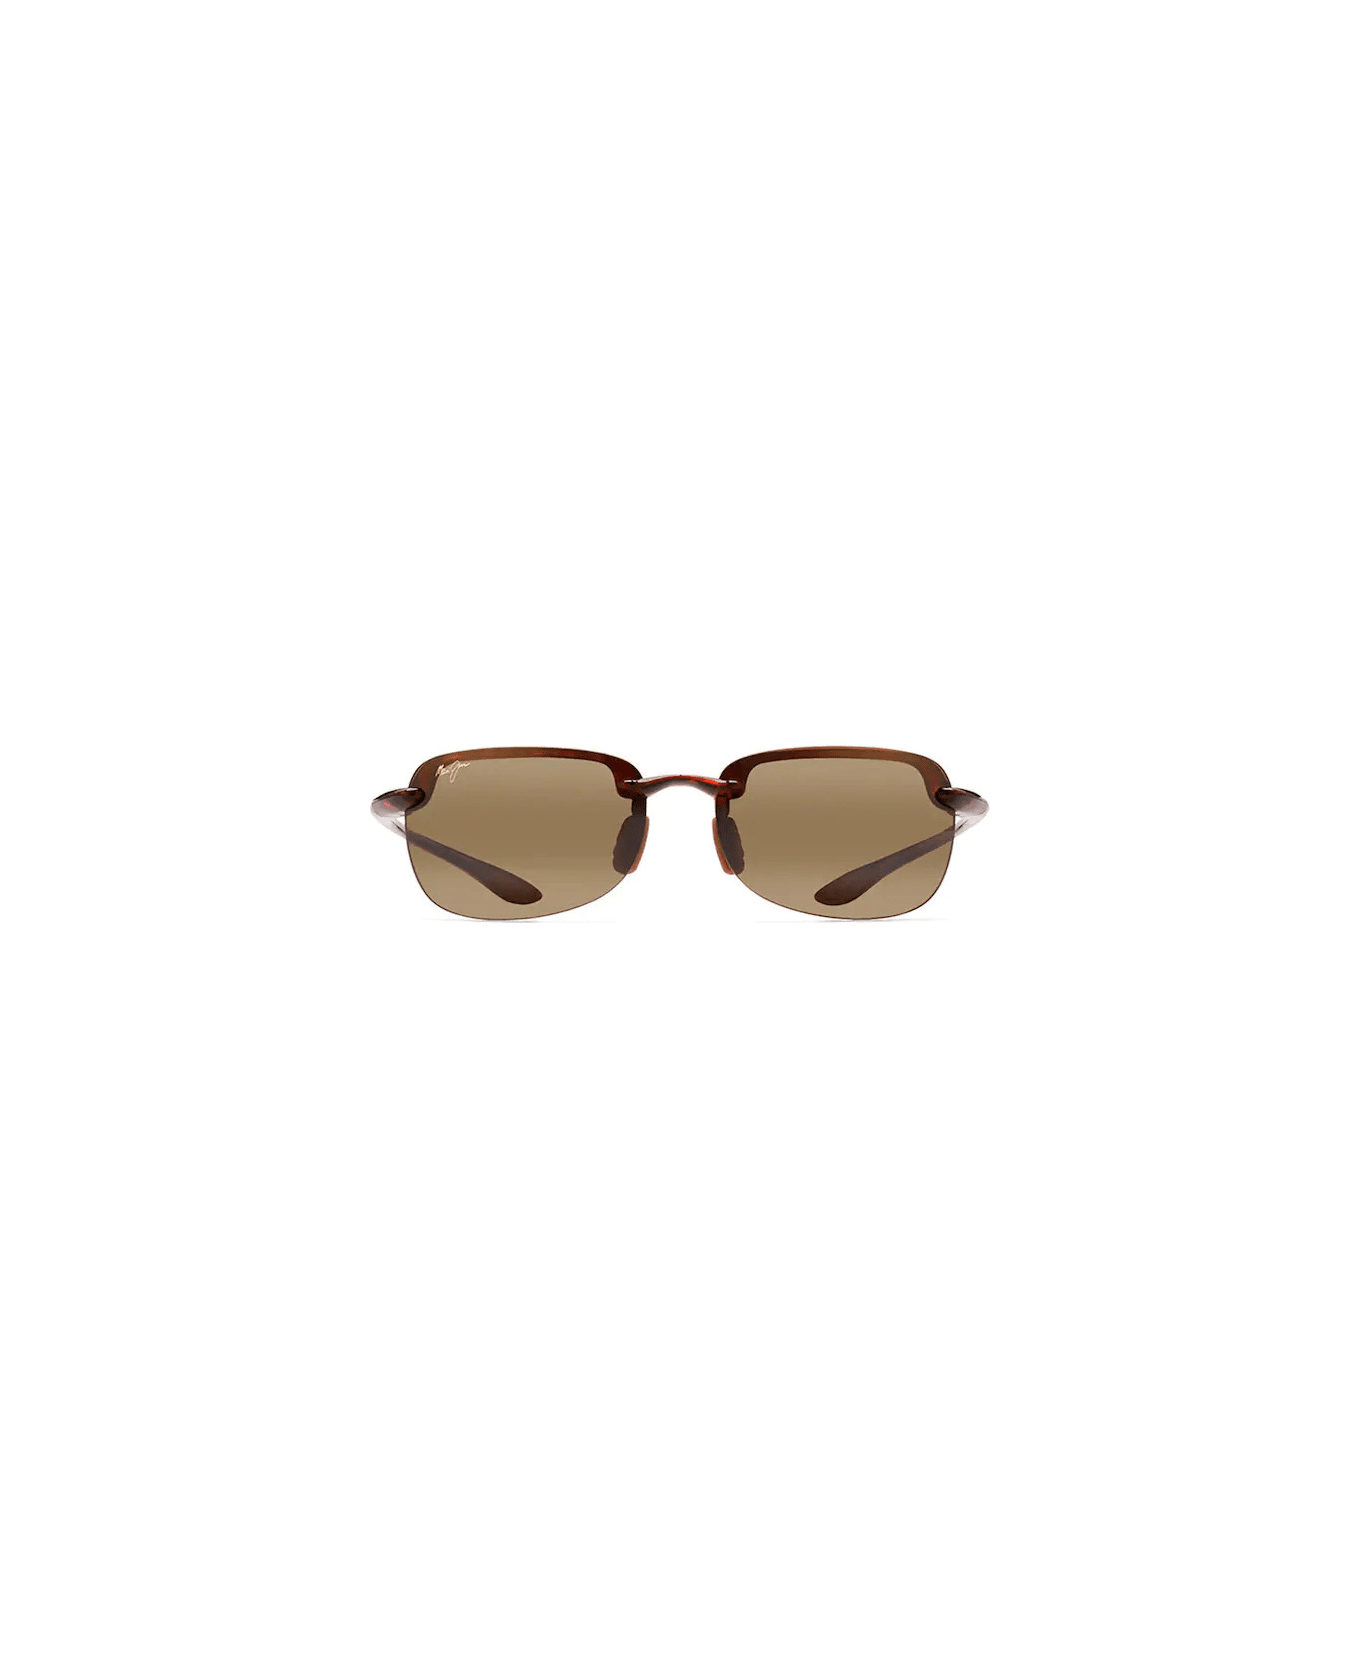 Maui Jim MJ408-10 Sunglasses - Marrone